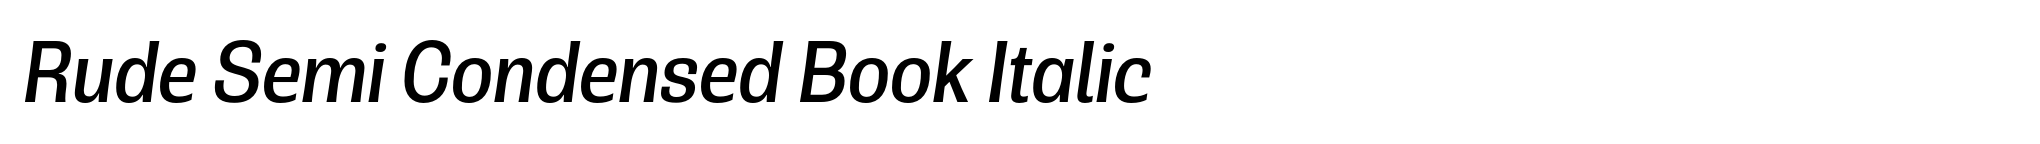 Rude Semi Condensed Book Italic image